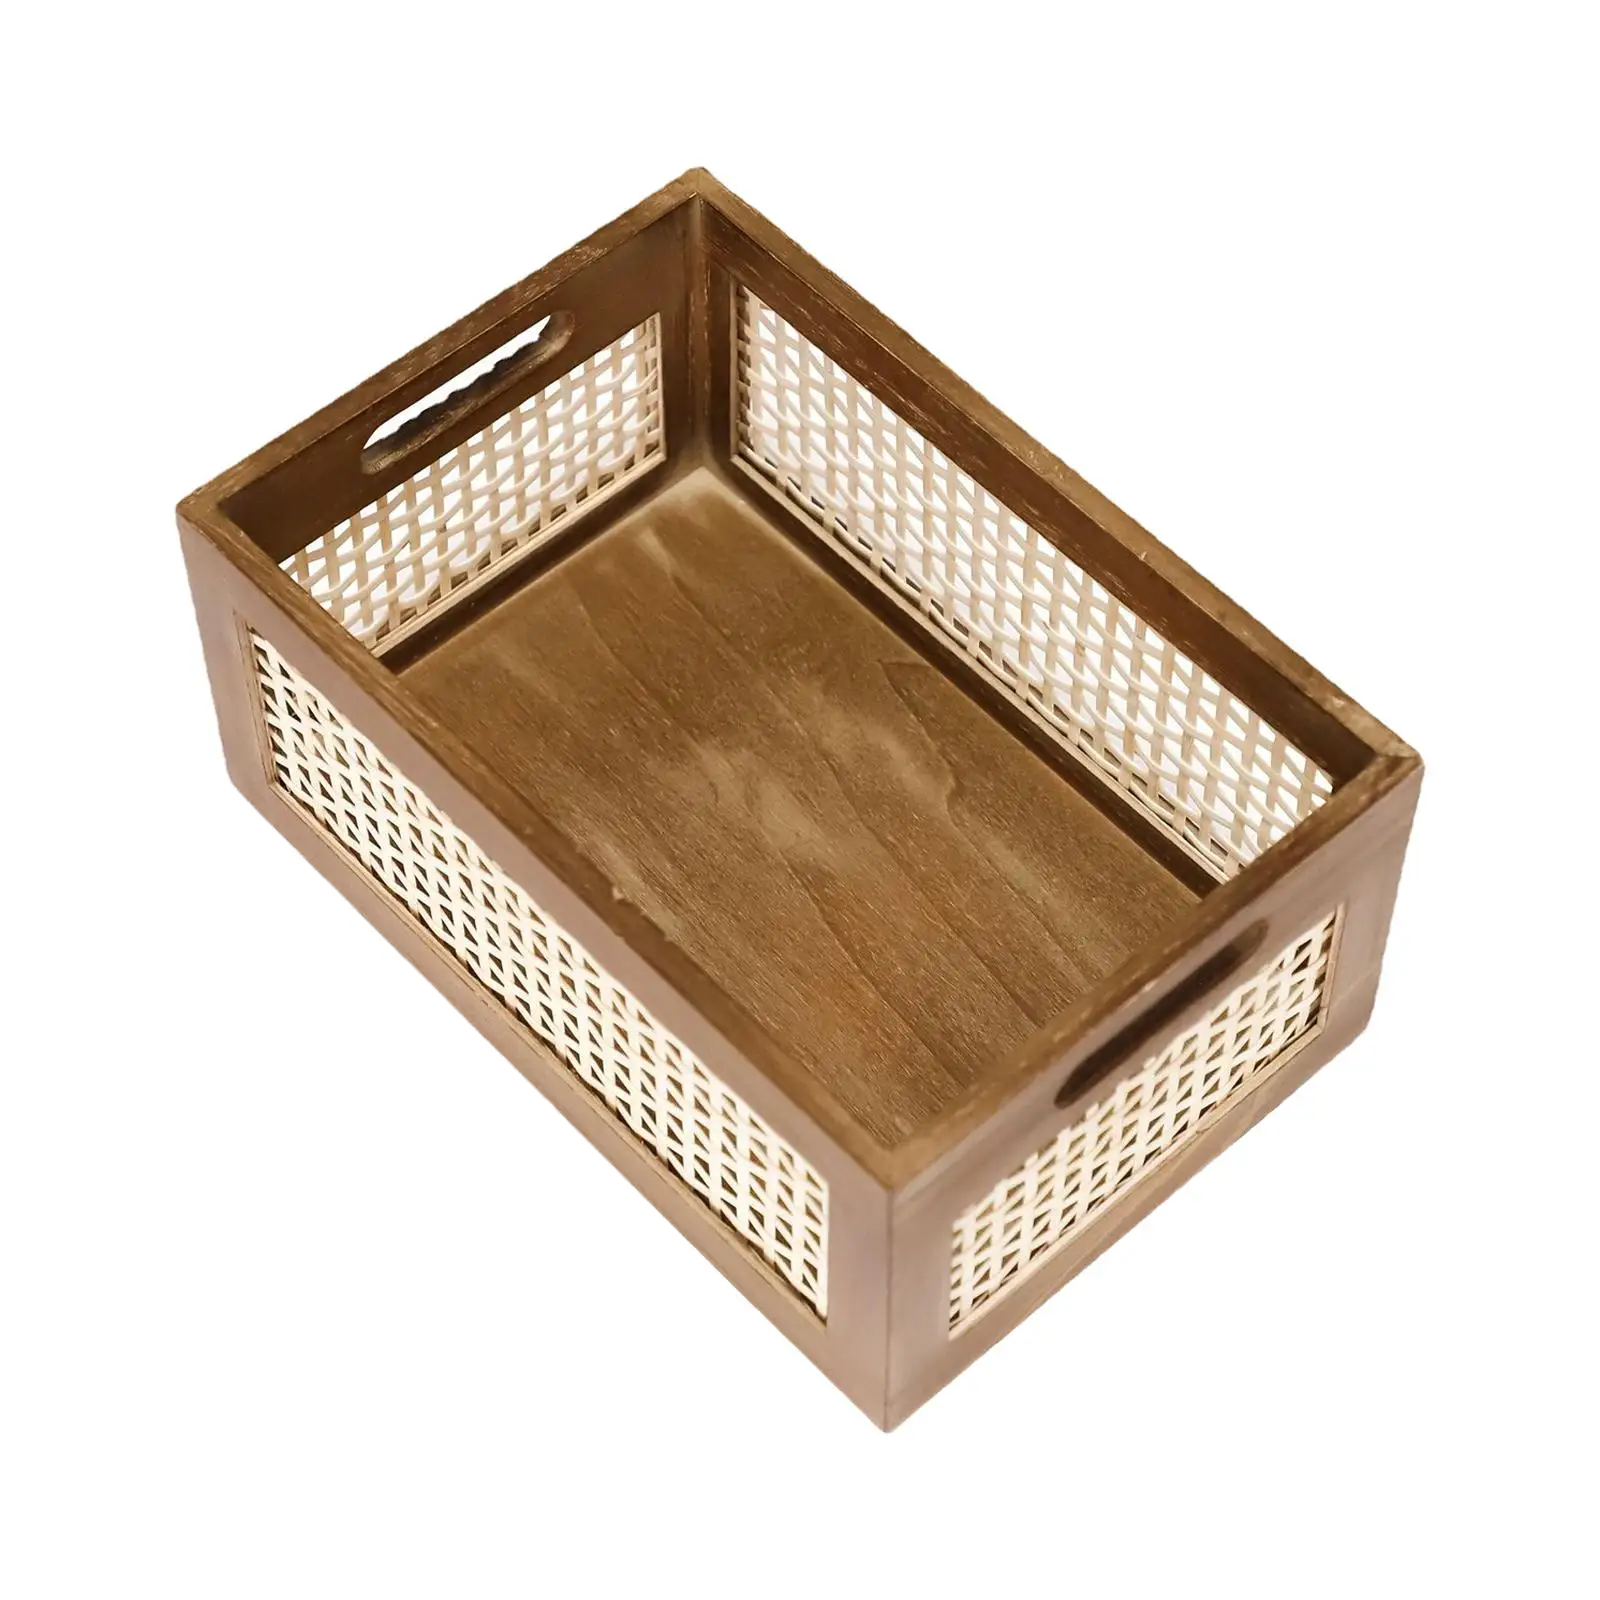 Decorative Rustic Basket Organizer Crates Wood Frame Storage Basket for Dresser Drawer Kitchen Countertop Office Desktop